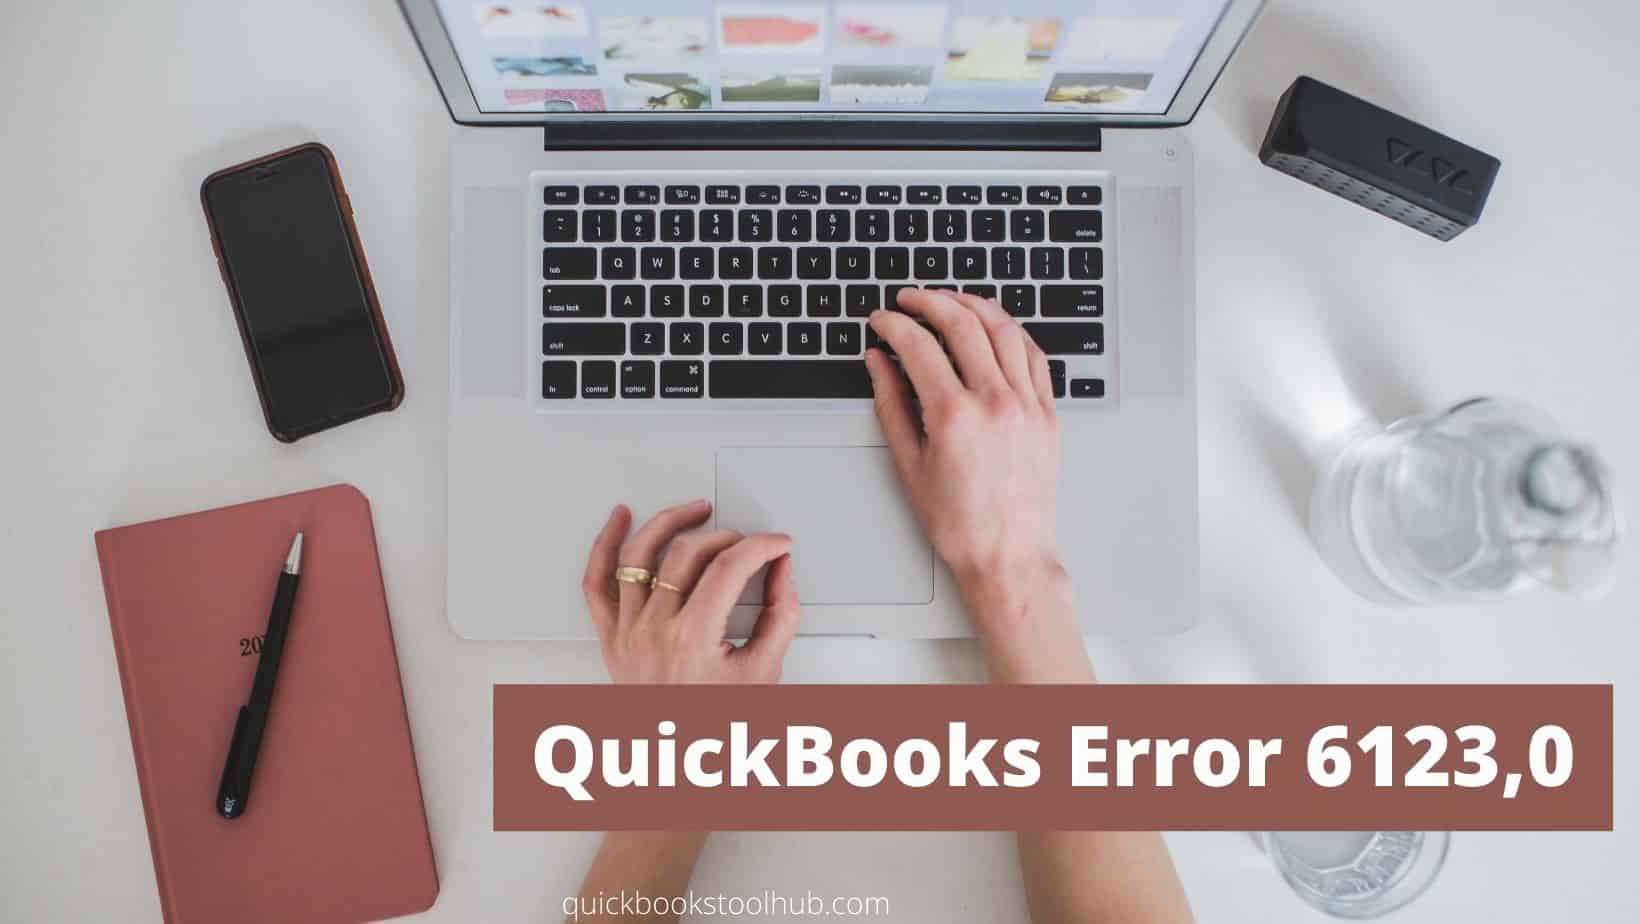 Quickbooks Error 6123- Solved in Simple Steps